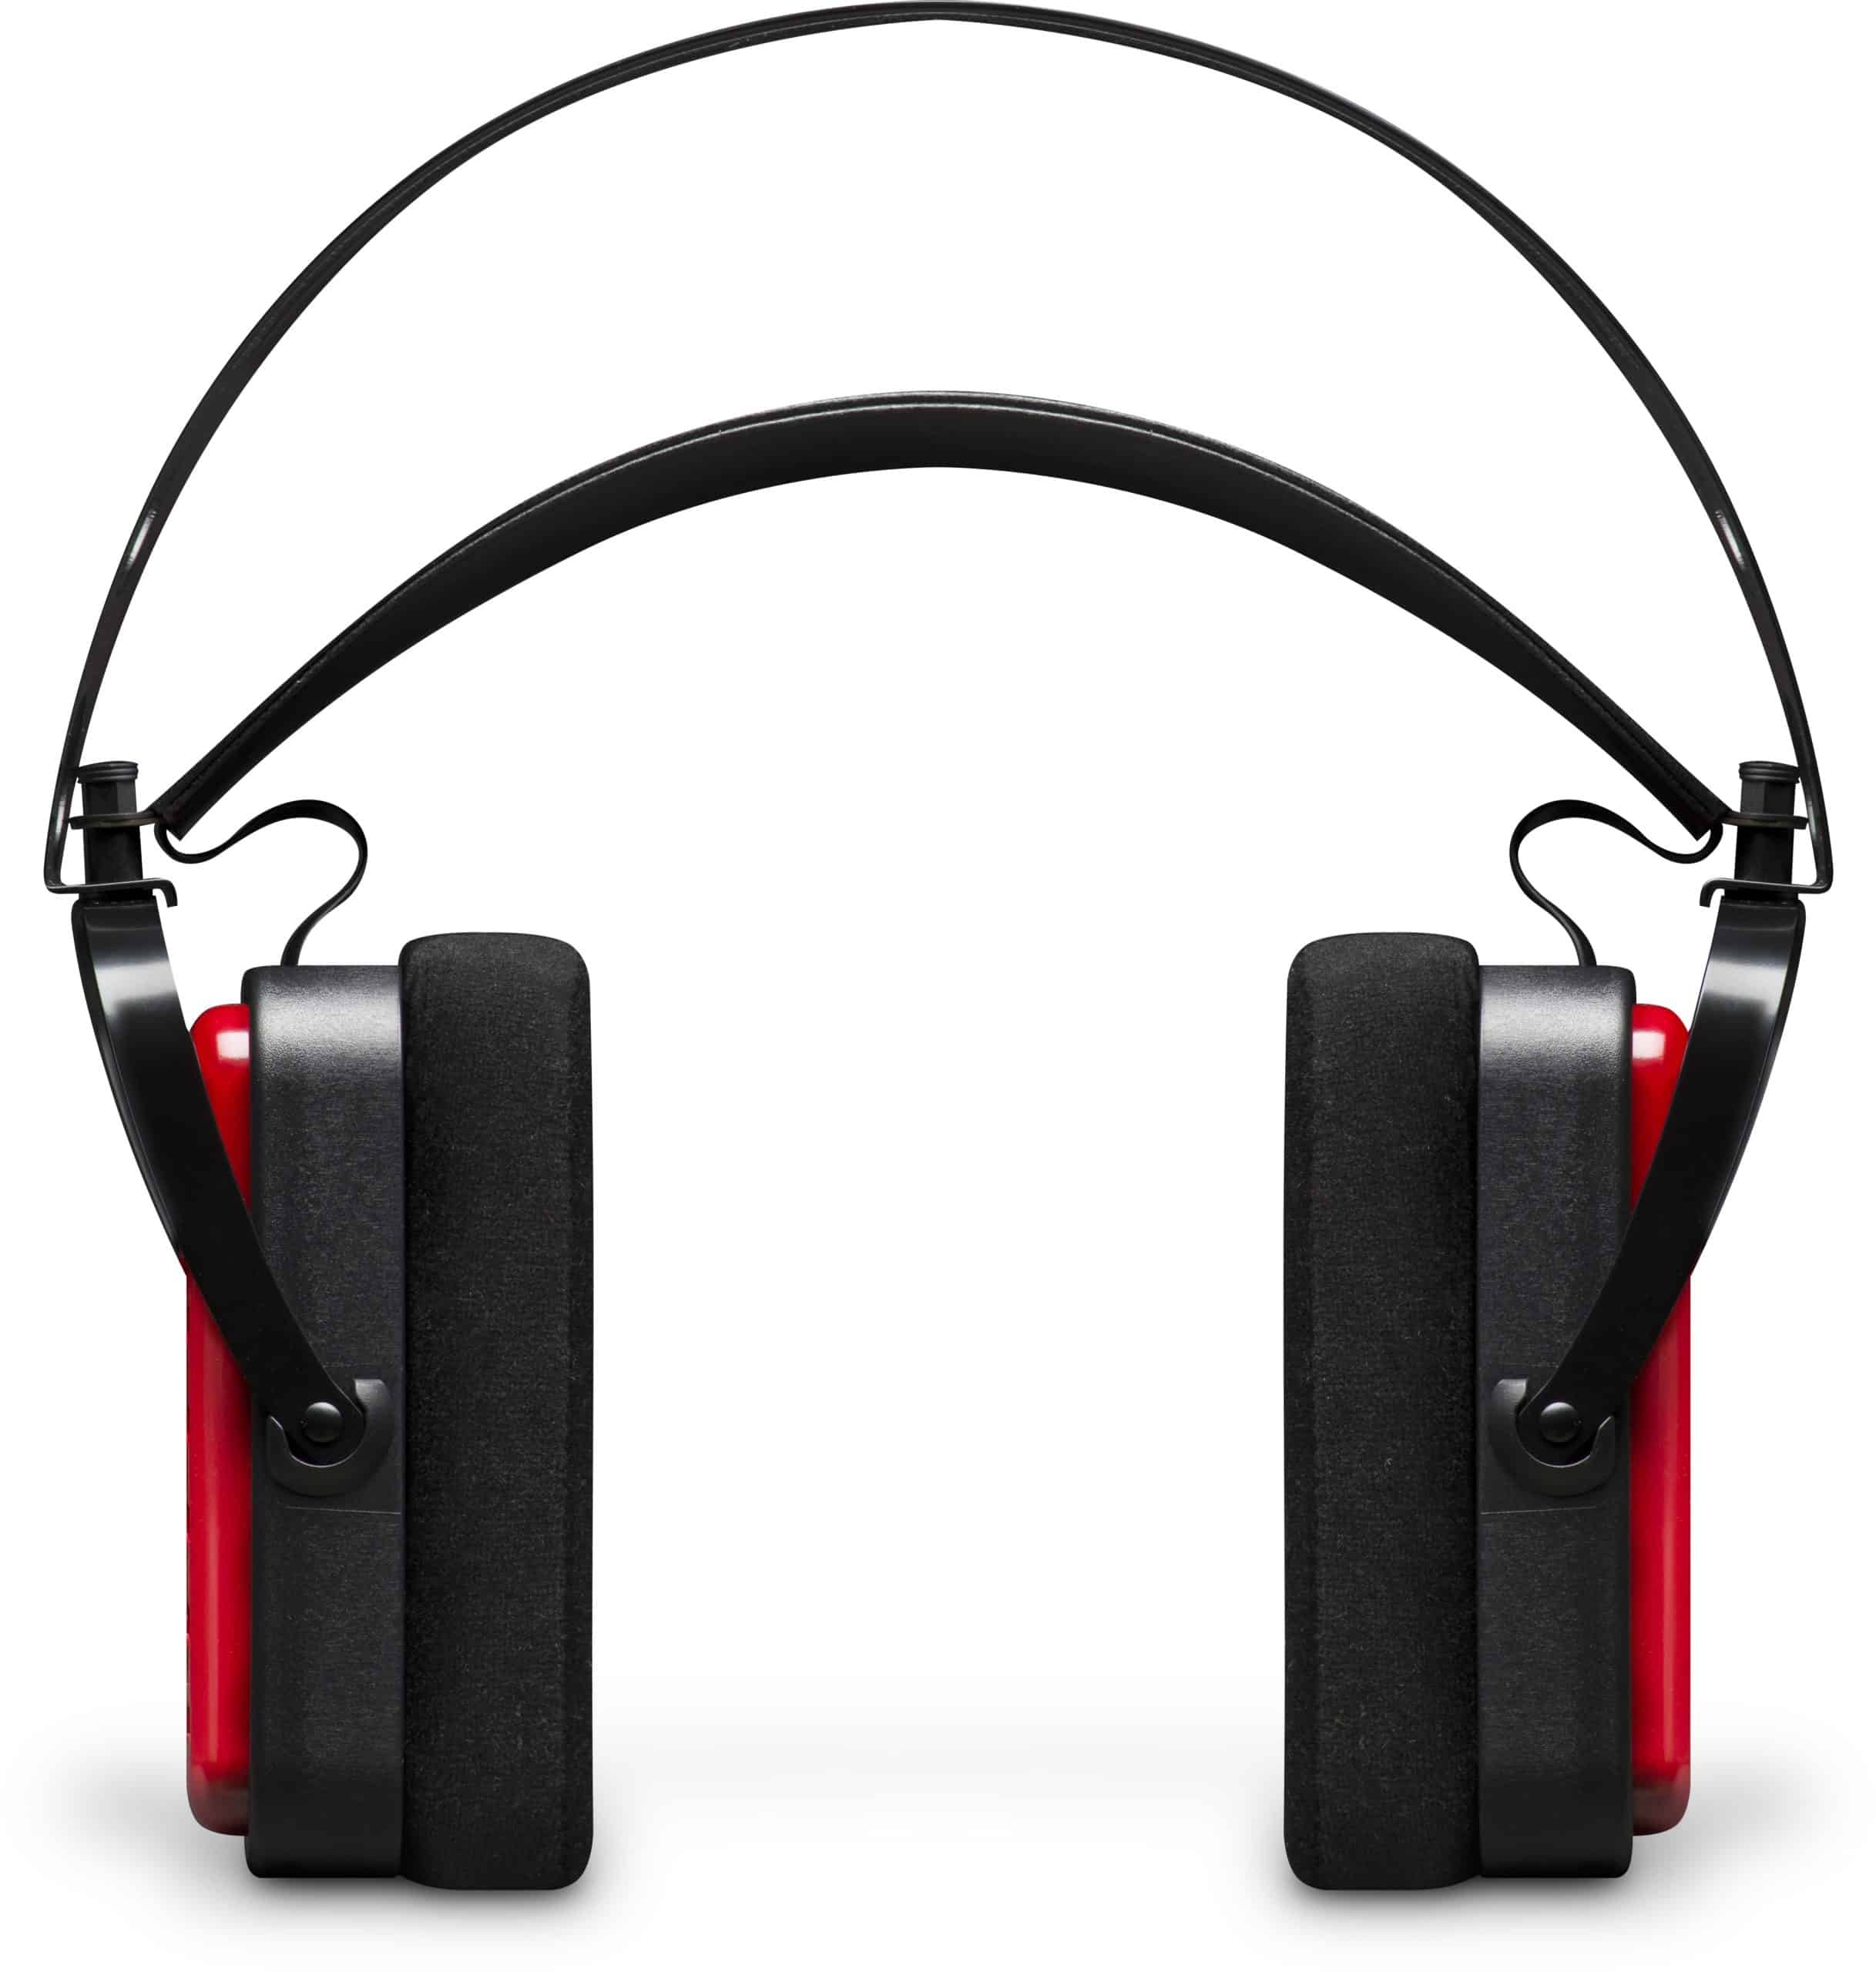 Planar new Reference-Grade Headphones by Avantone Pro